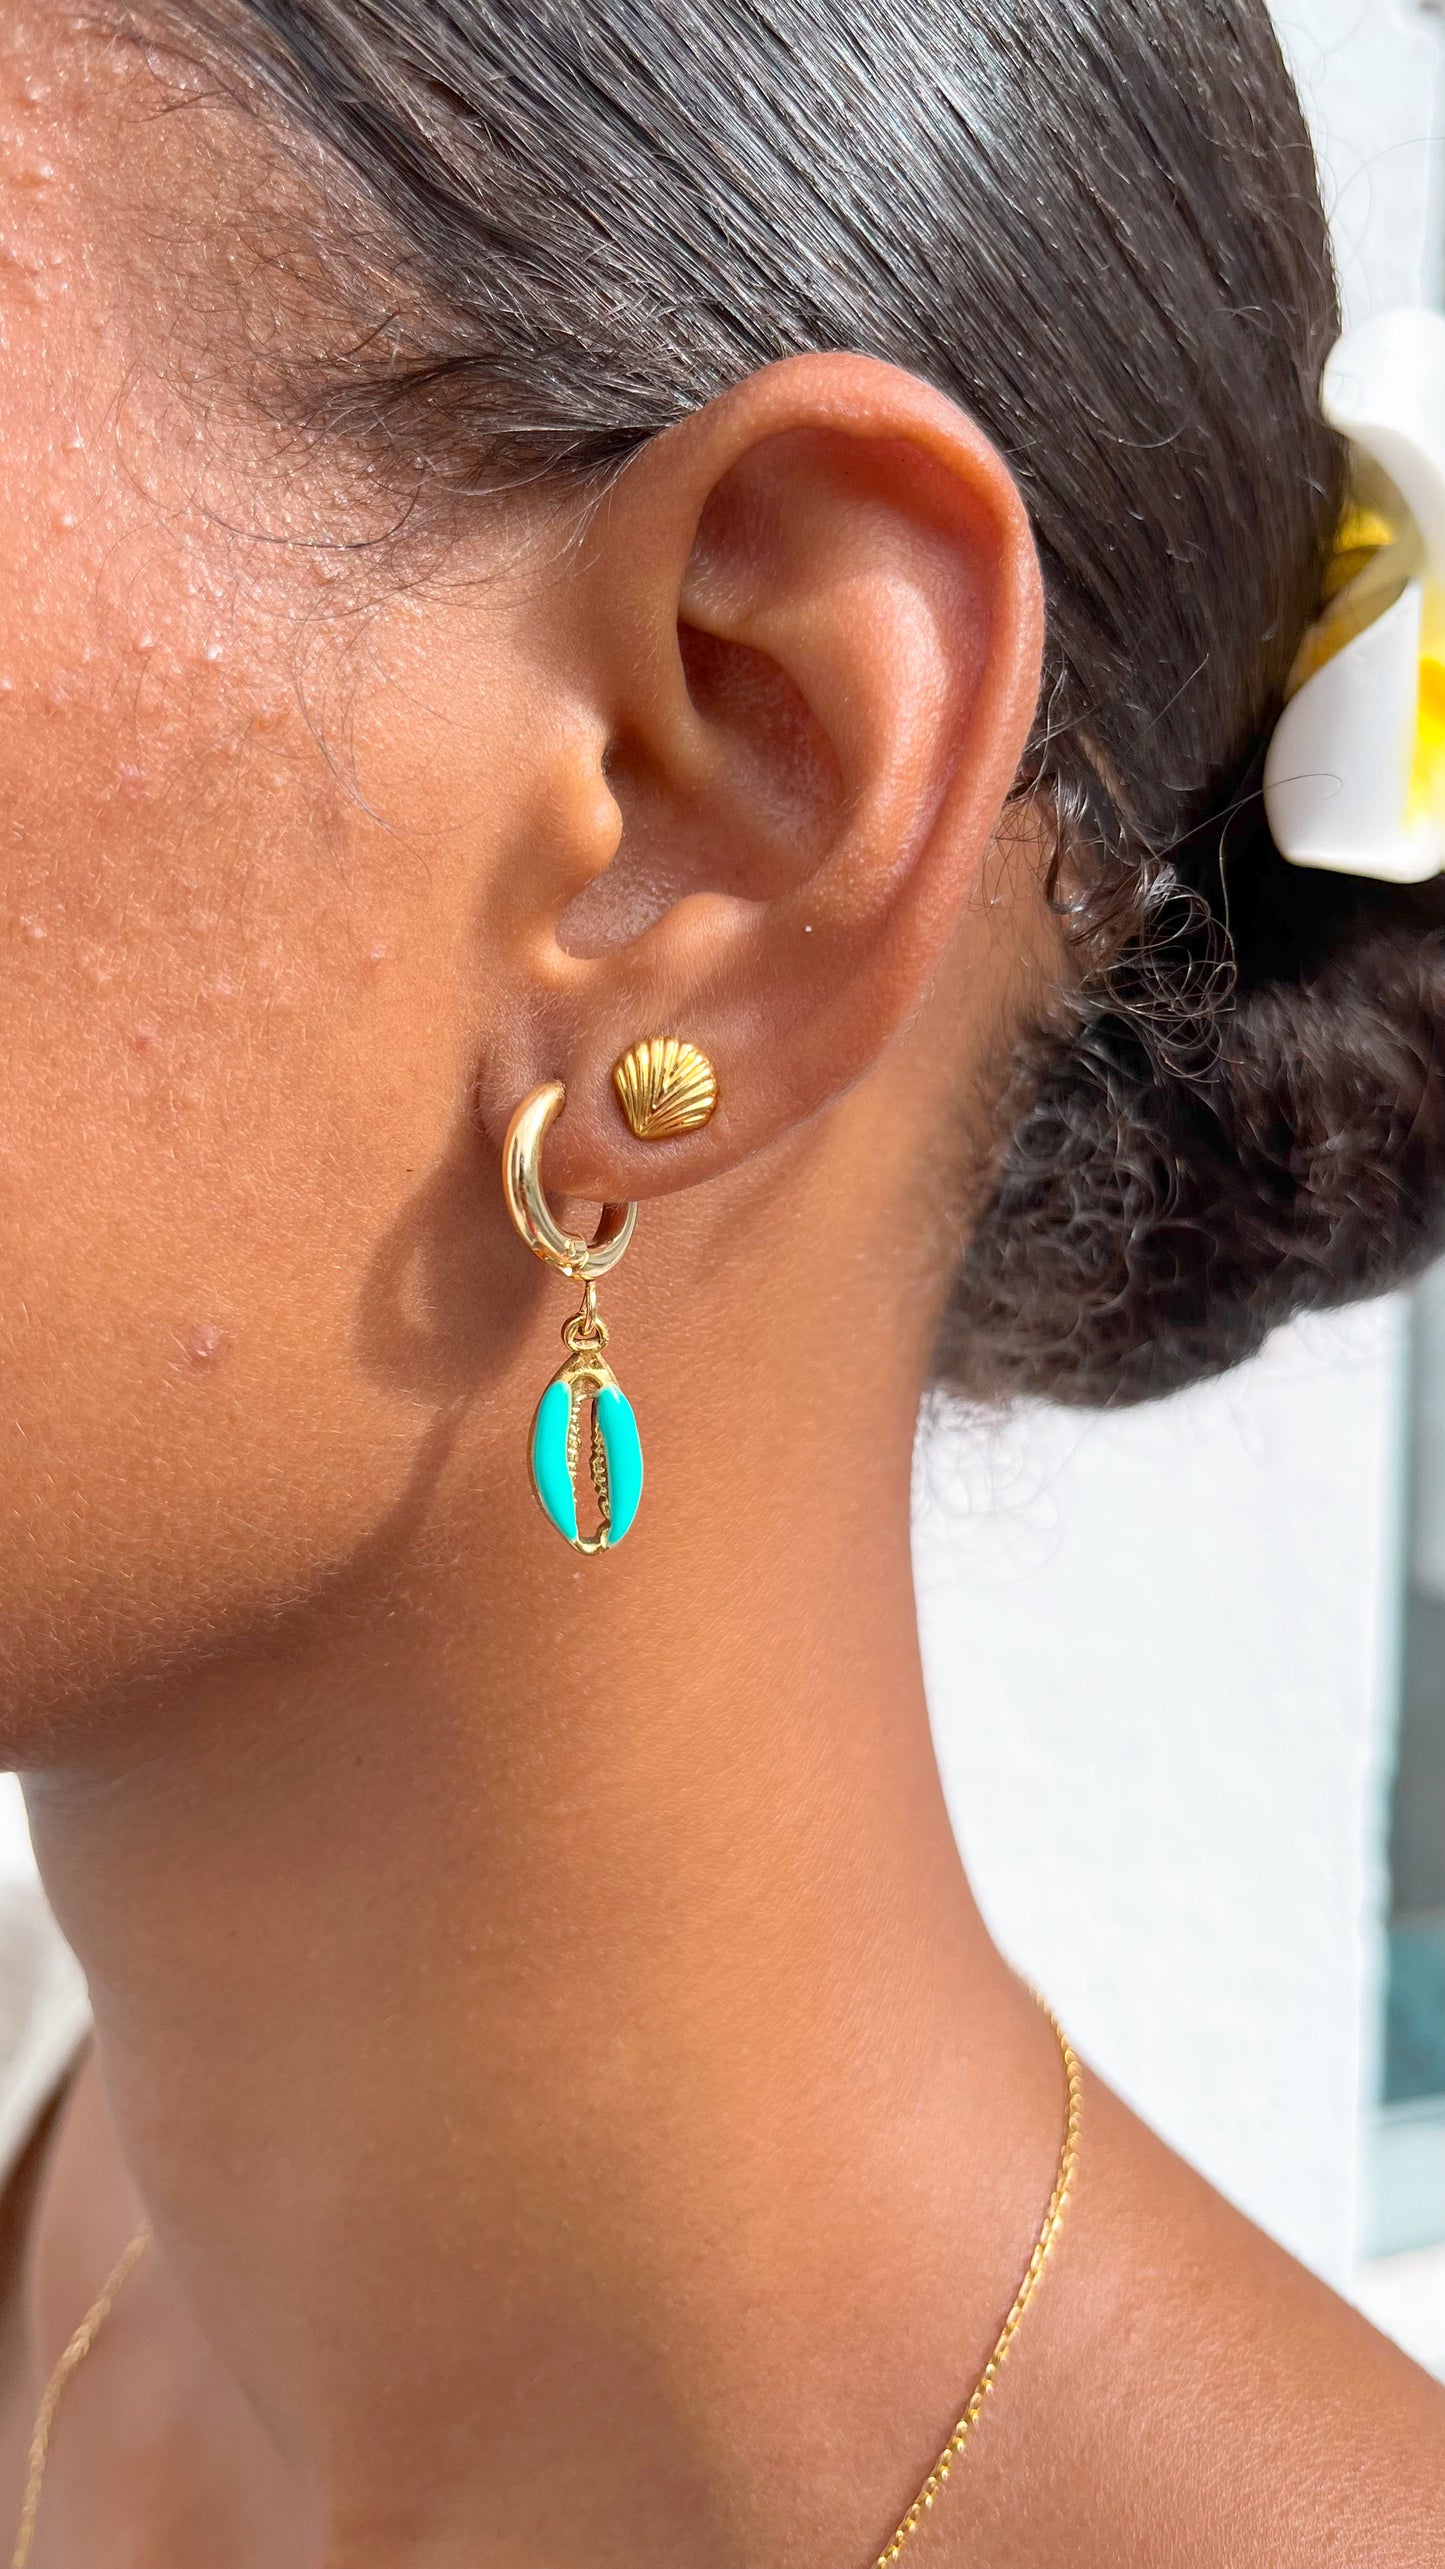 Shell golden stud earrings